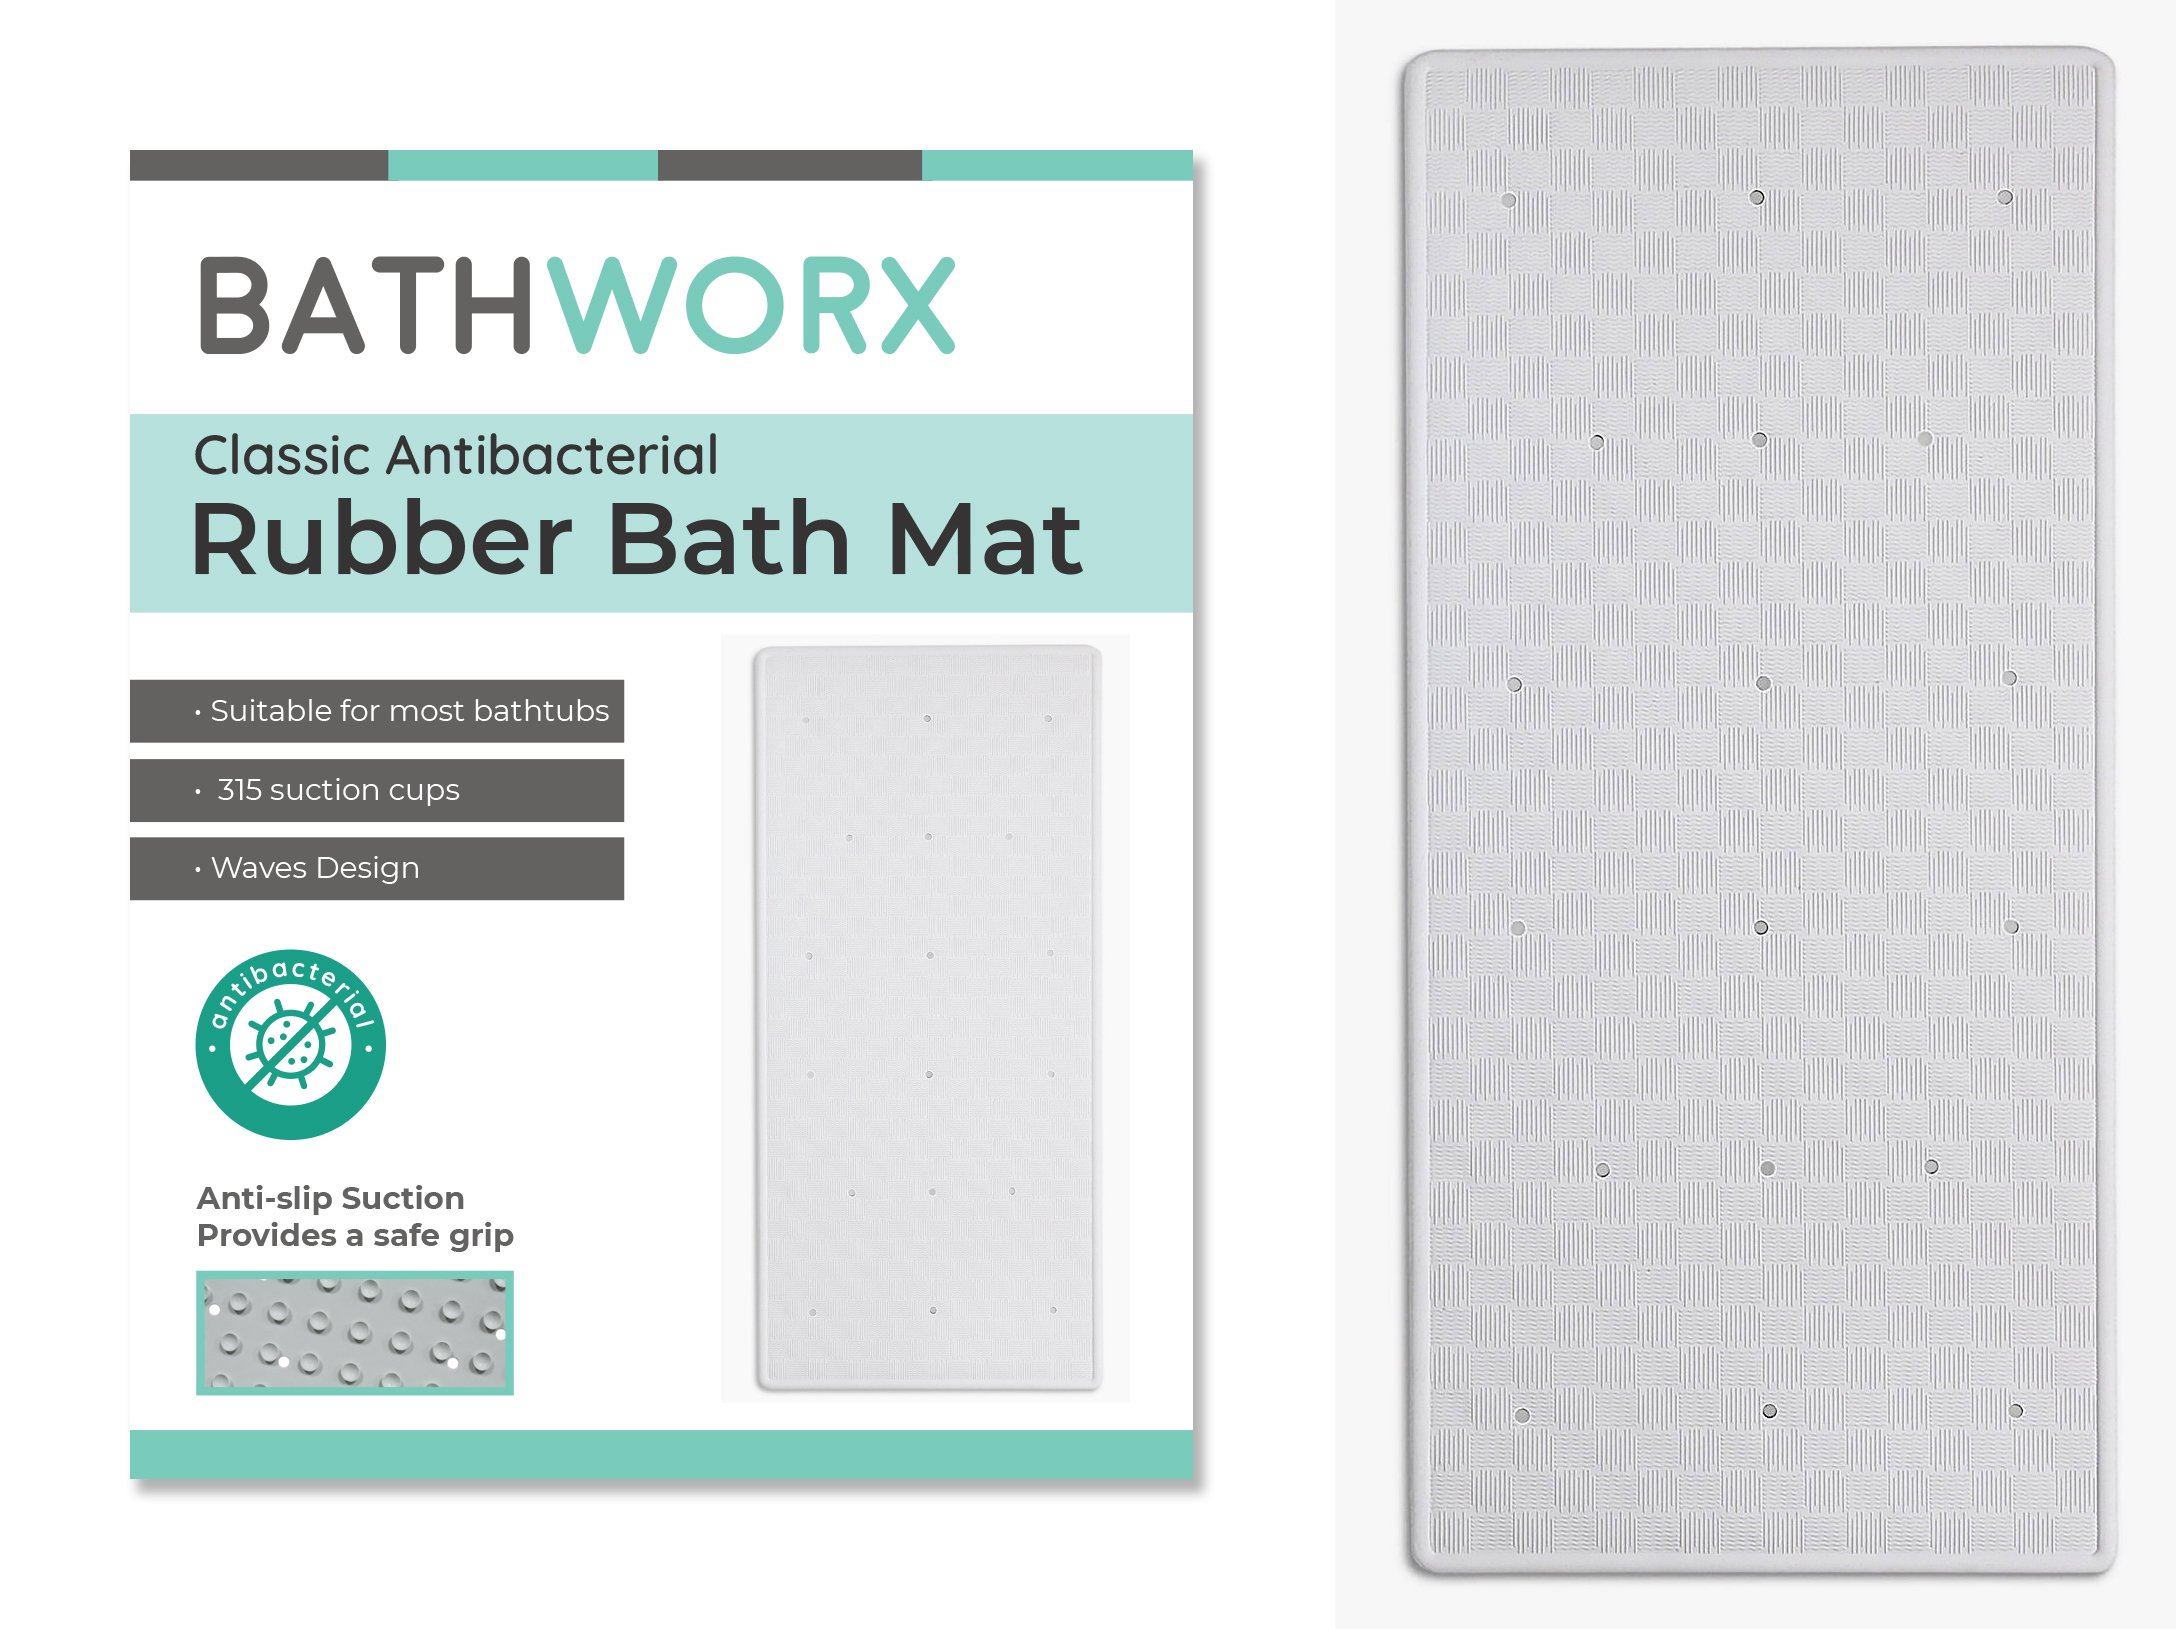 Bathworx Classic Antibacterial Rubber Bath Mat